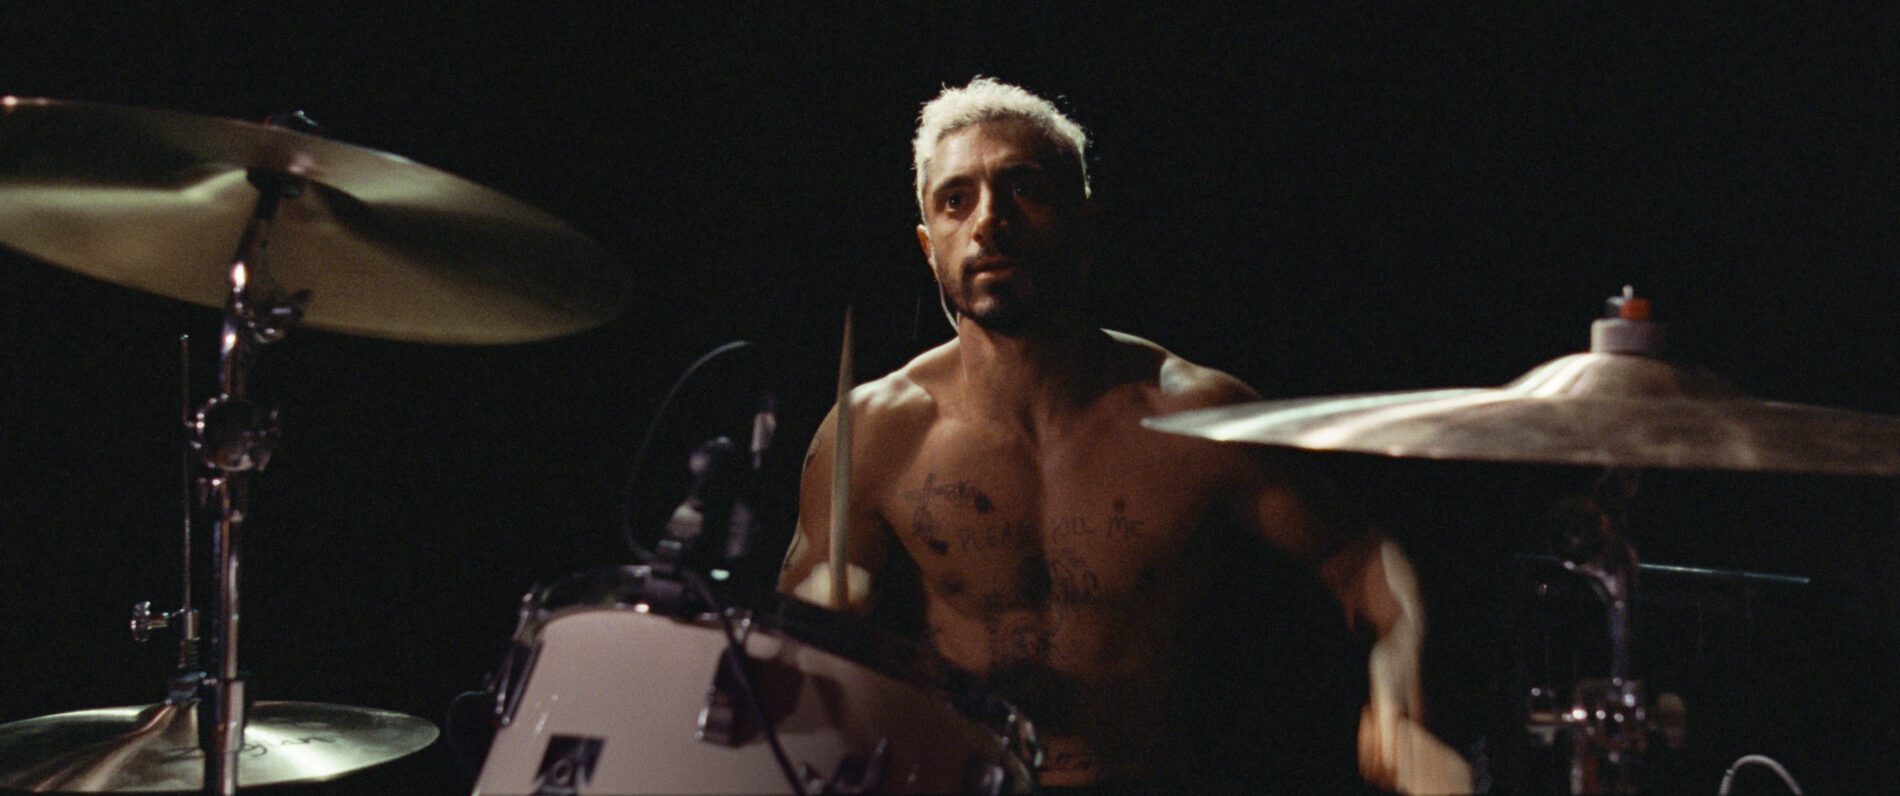 Riz Ahmed as Ruben drumming behind a drum kit. He is not wearing a shirt.